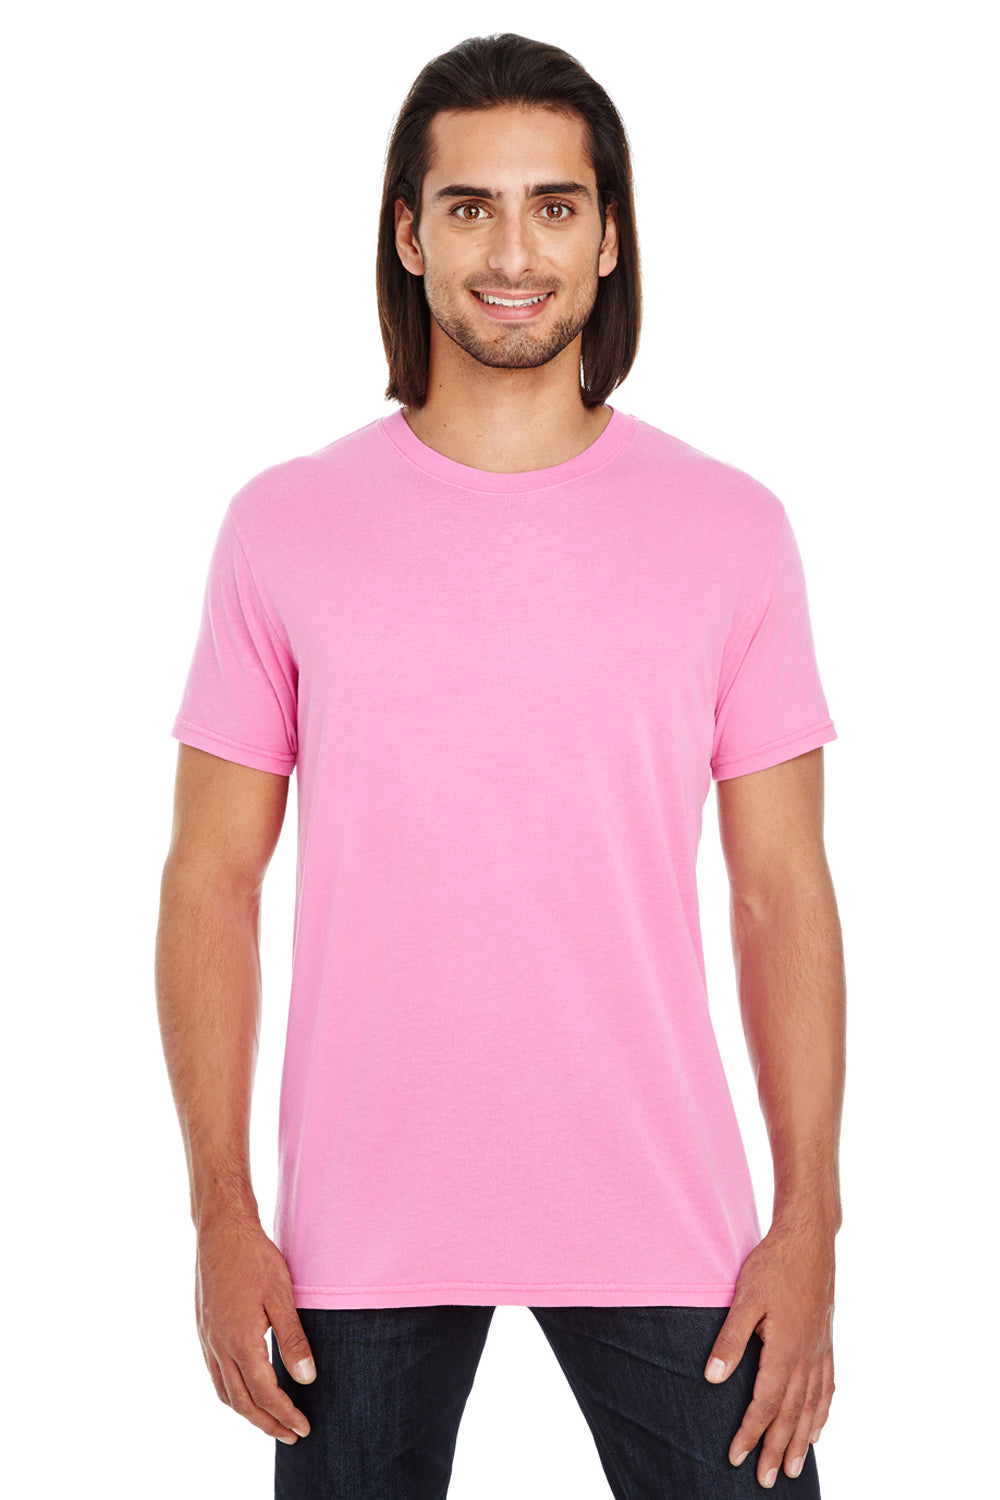 Threadfast Apparel 130A Mens Short Sleeve Crewneck T-Shirt Charity Pink Front